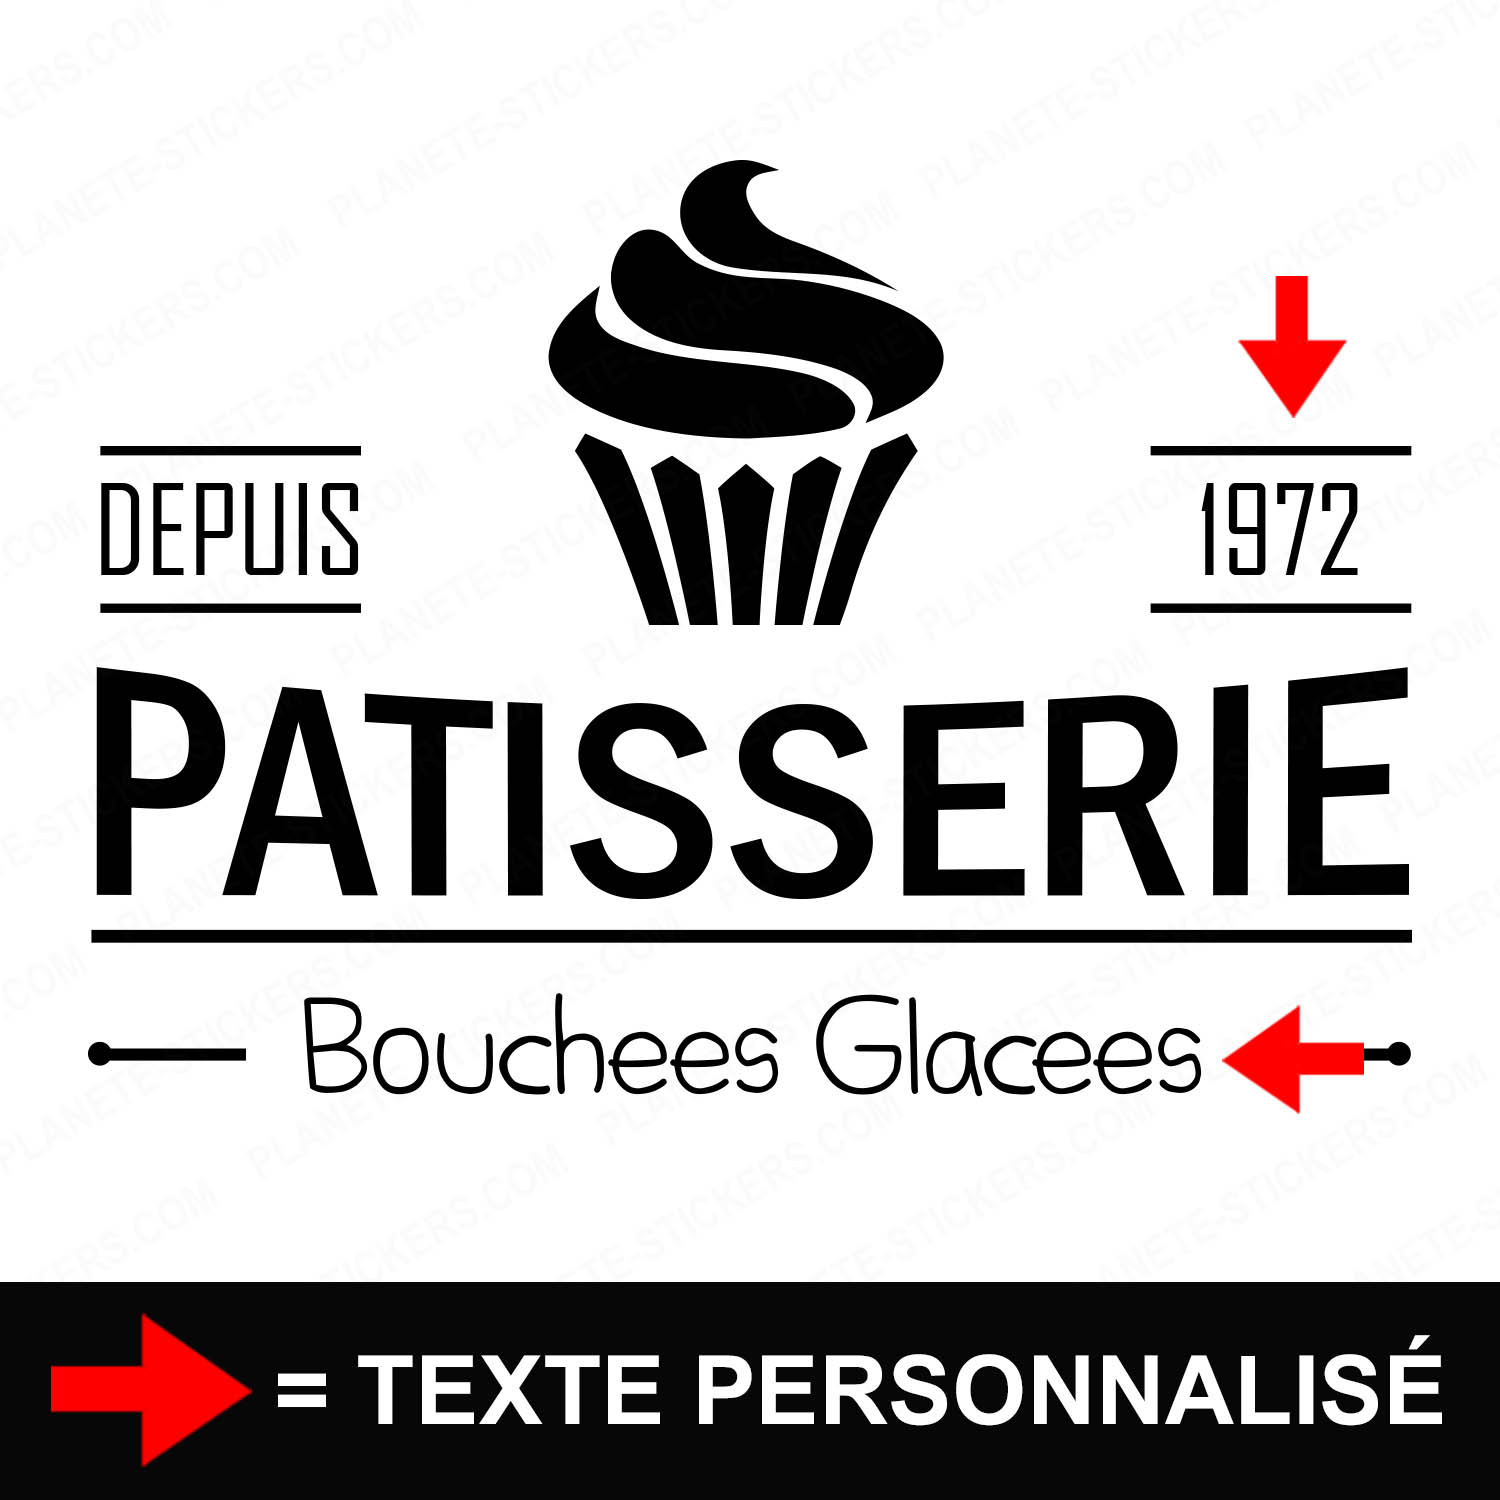 ref3patisserievitrine-stickers-patissier-vitrine-sticker-personnalisé-autocollant-pro-gateau-cupcake-commerce-professionnel-2